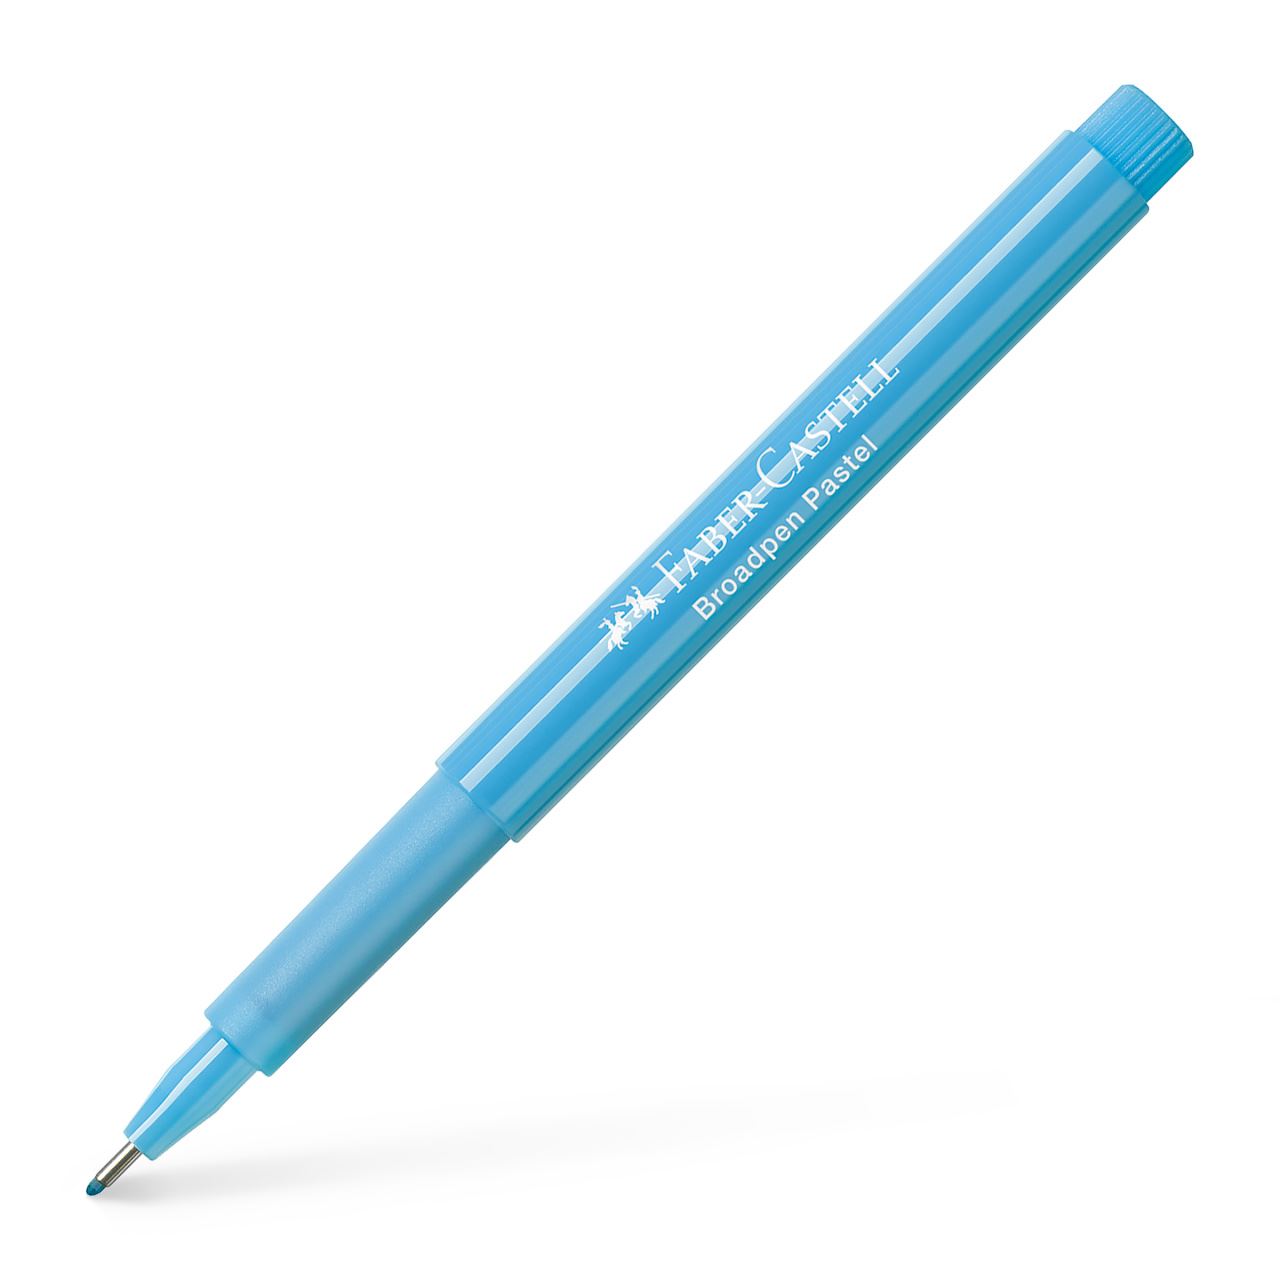 Faber-Castell - Fibre tip pen Broadpen pastel light blue